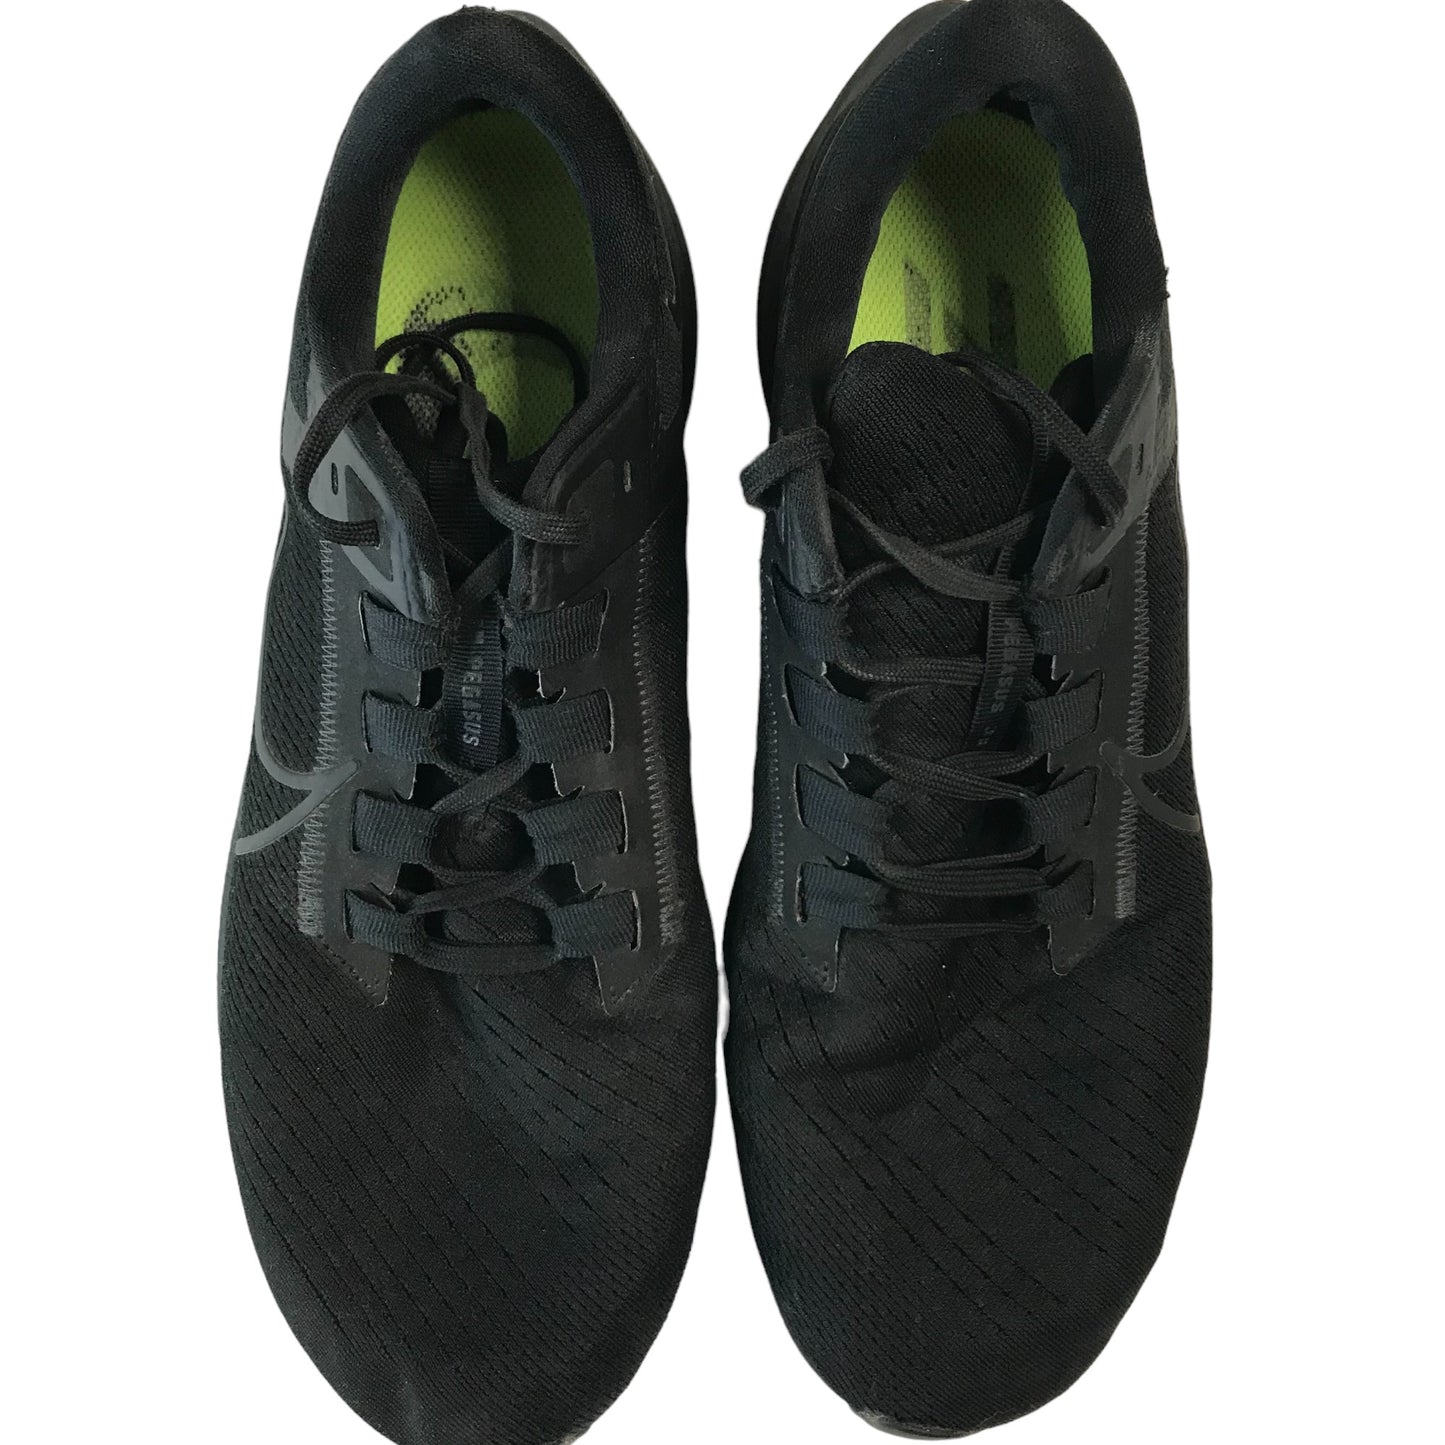 Nike Pegasus 38 Trainers Shoe Size 9.5 Black Plain Sporty Sneakers